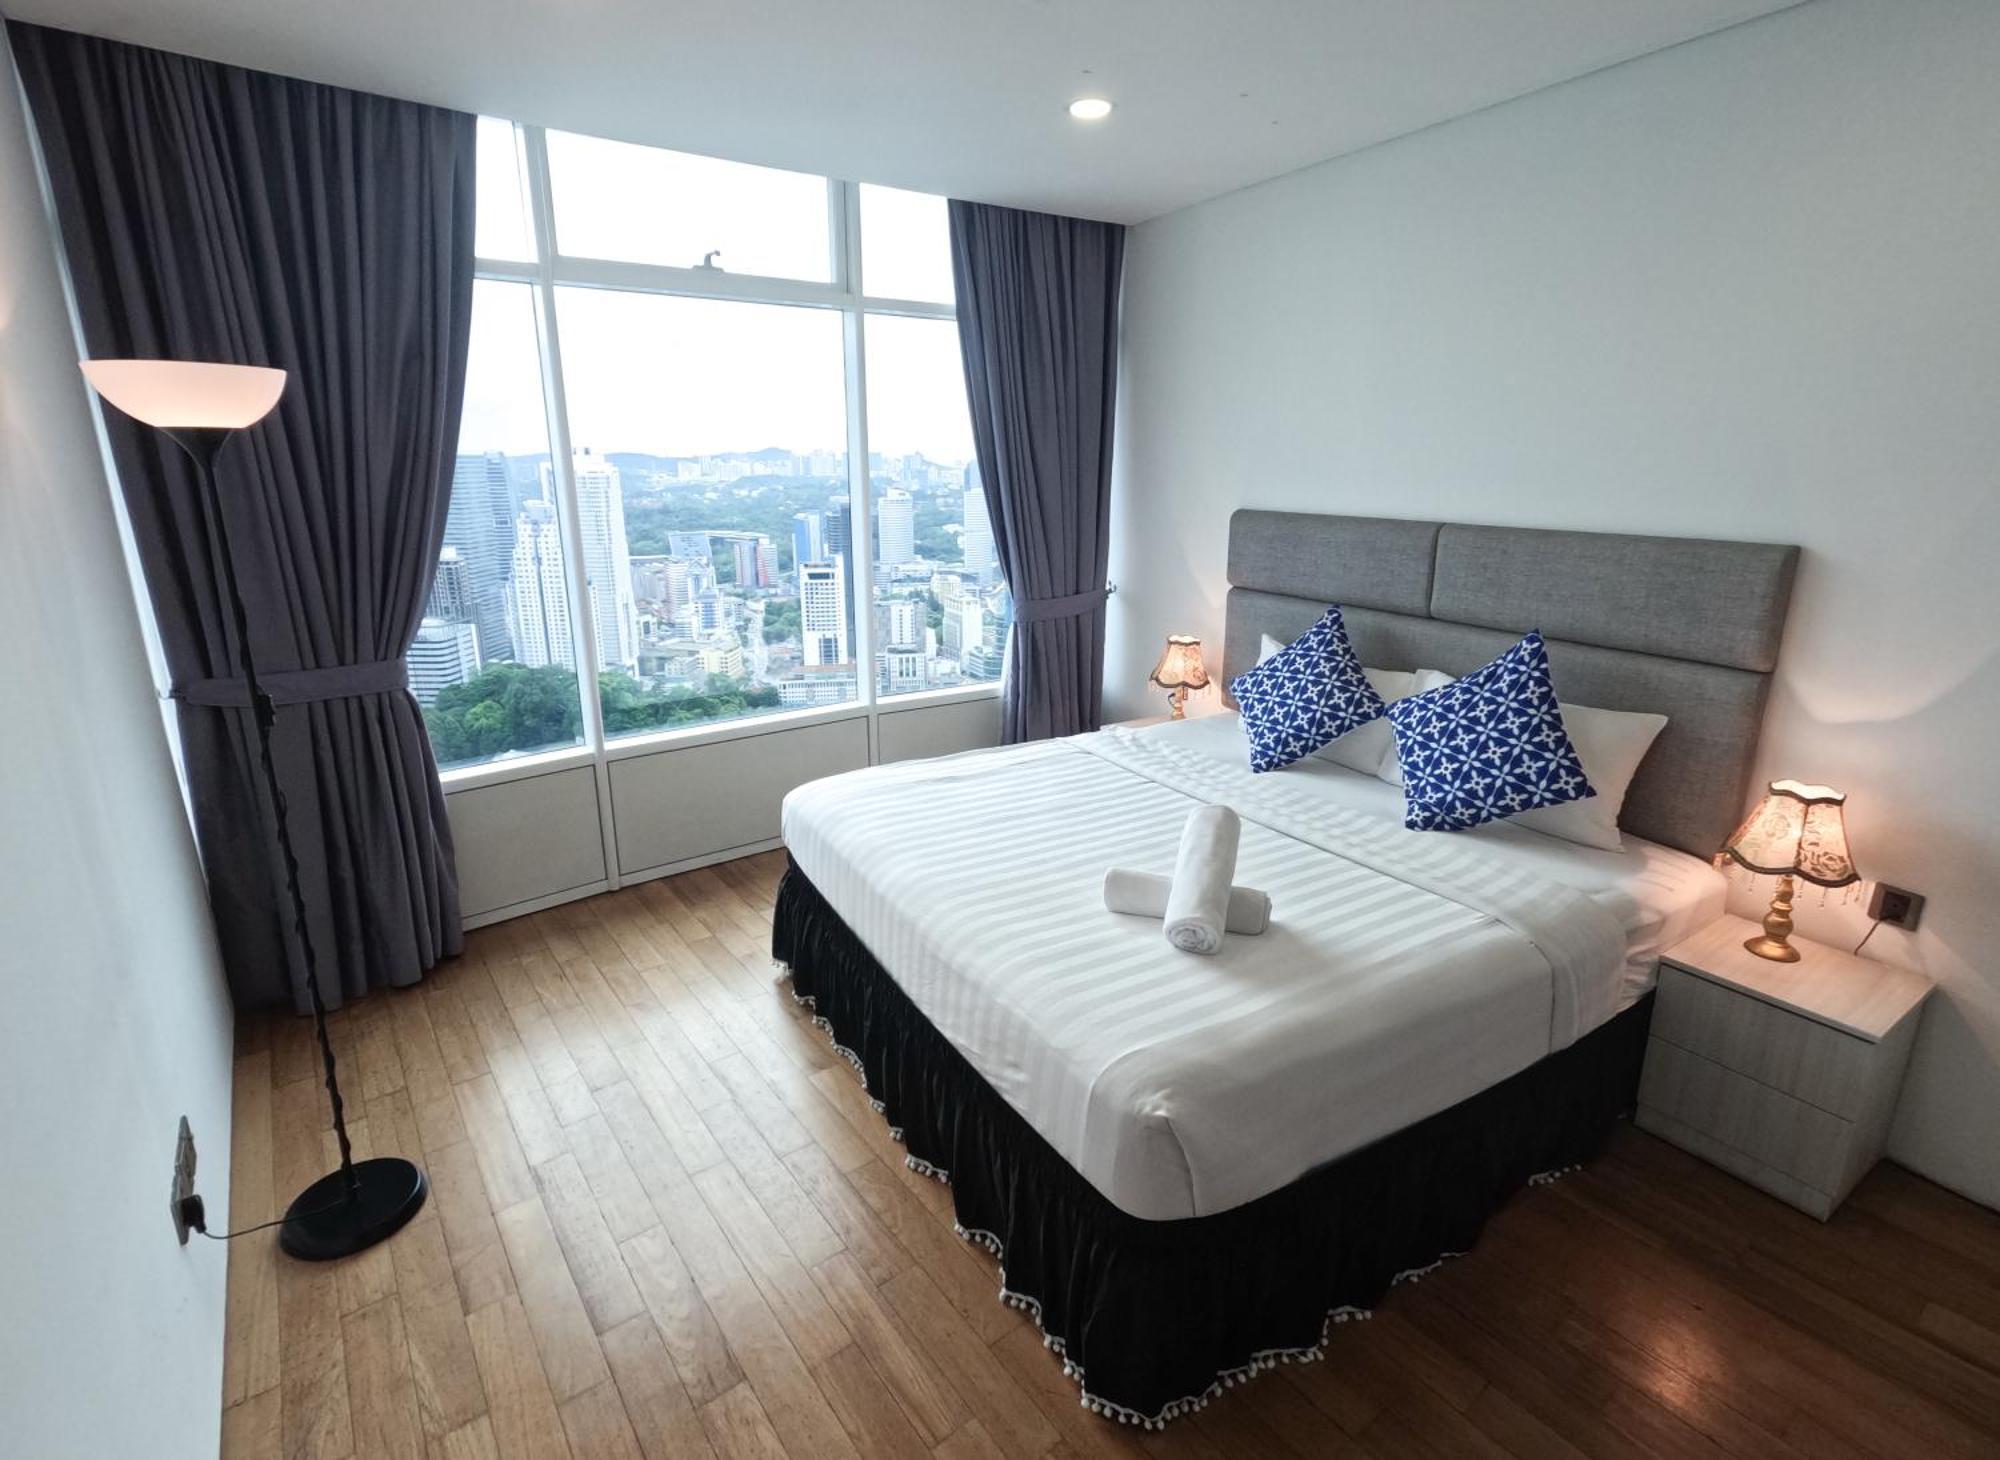 Yemala Suites @ Vortex Klcc Kuala Lumpur Buitenkant foto